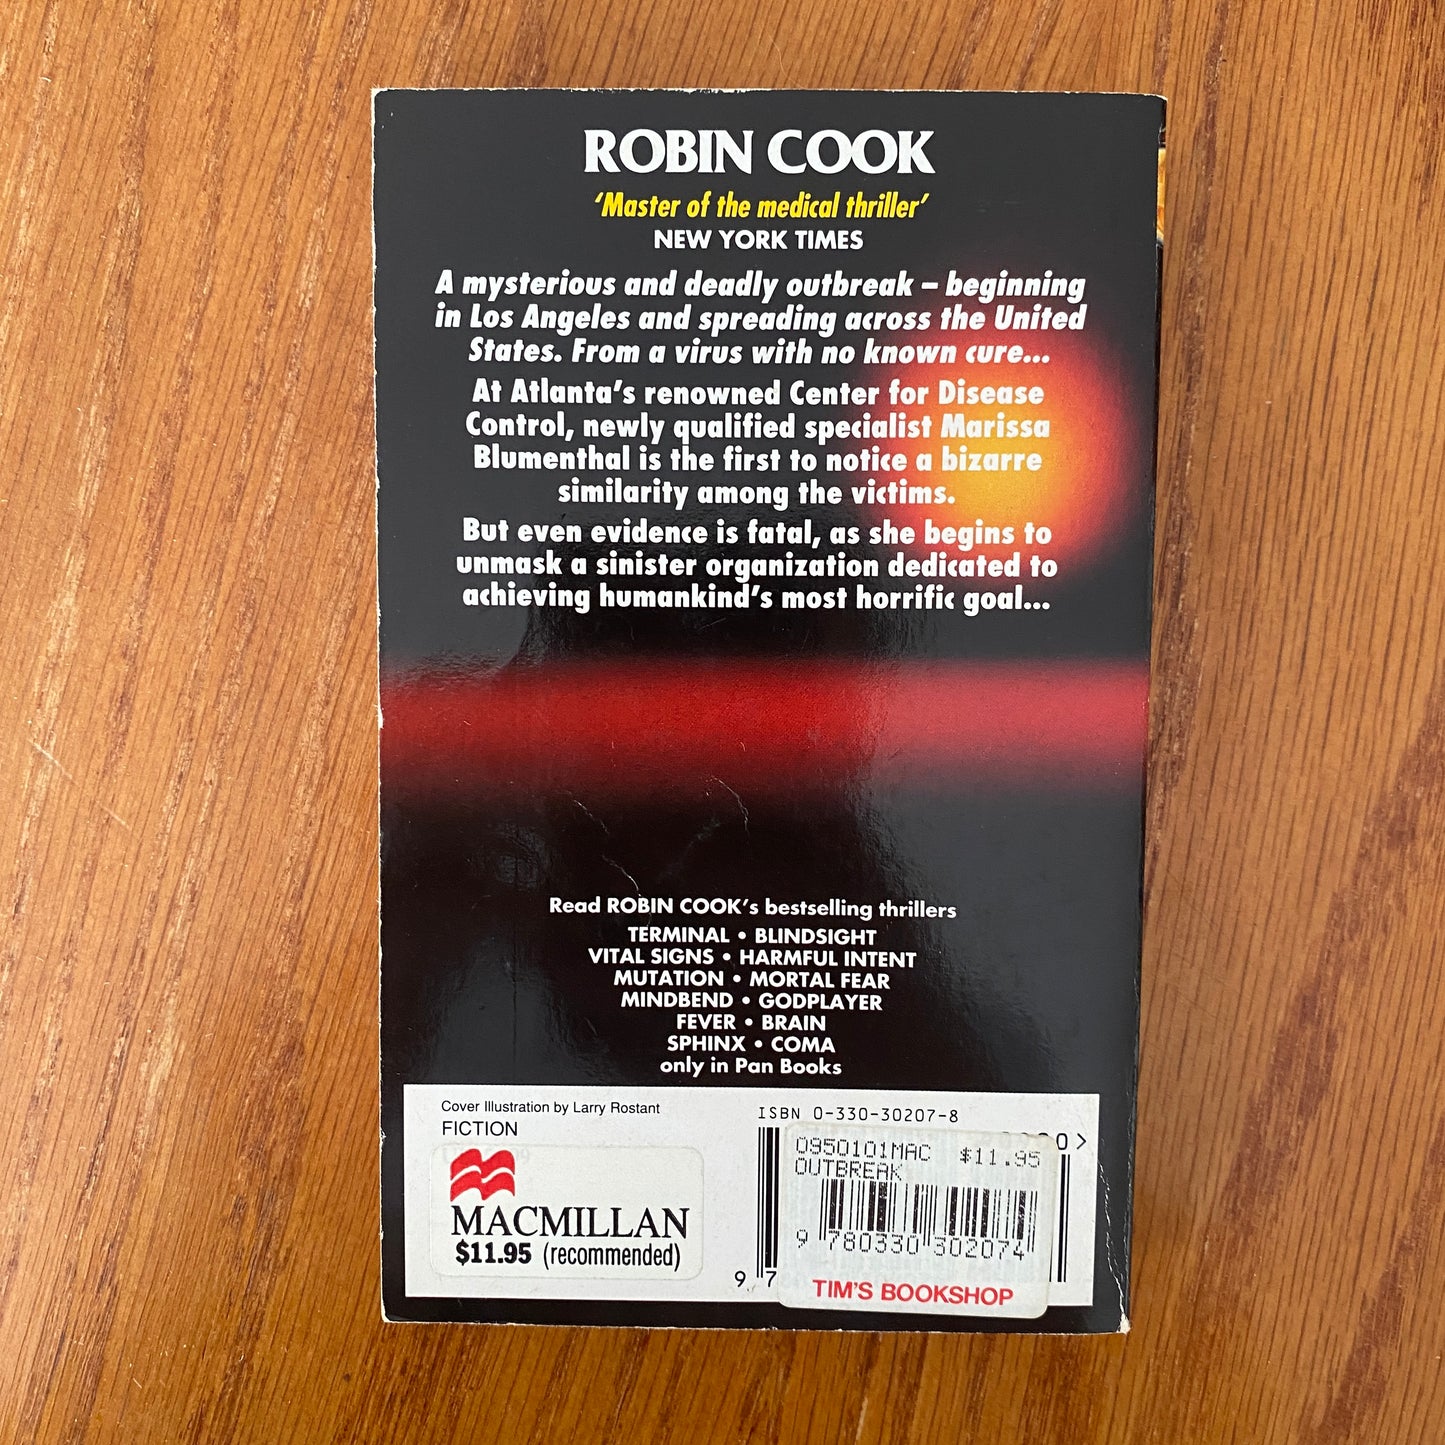 Robin Cook - Outbreak